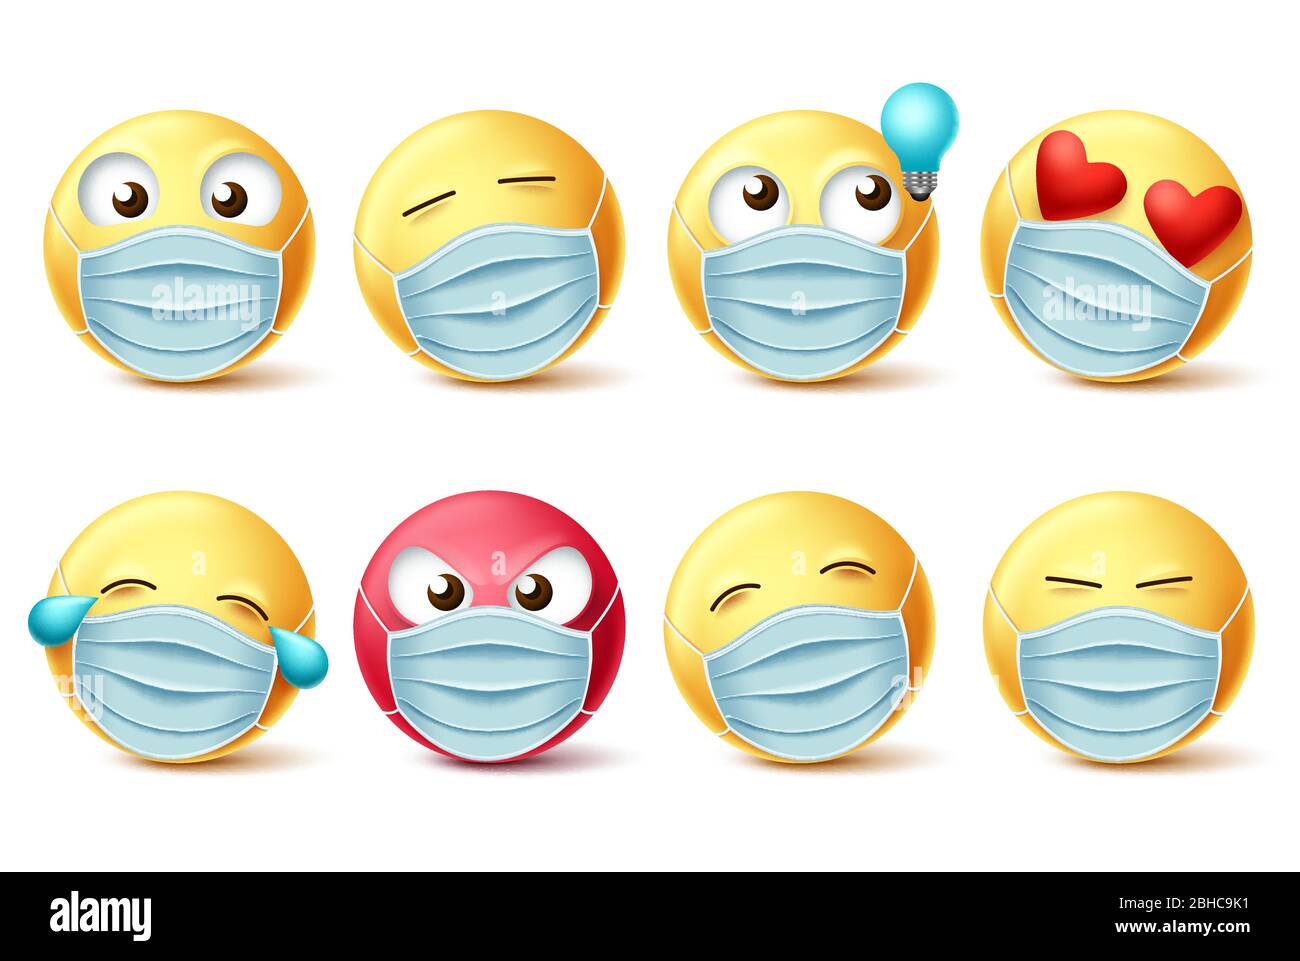 Emoji covid-19 Gesichtsmaske Vektor-Set. Emojis und Emoticons mit Mimik und Gesichtsmaske für Covid-19 Corona Virus Design Element. Stock Vektor